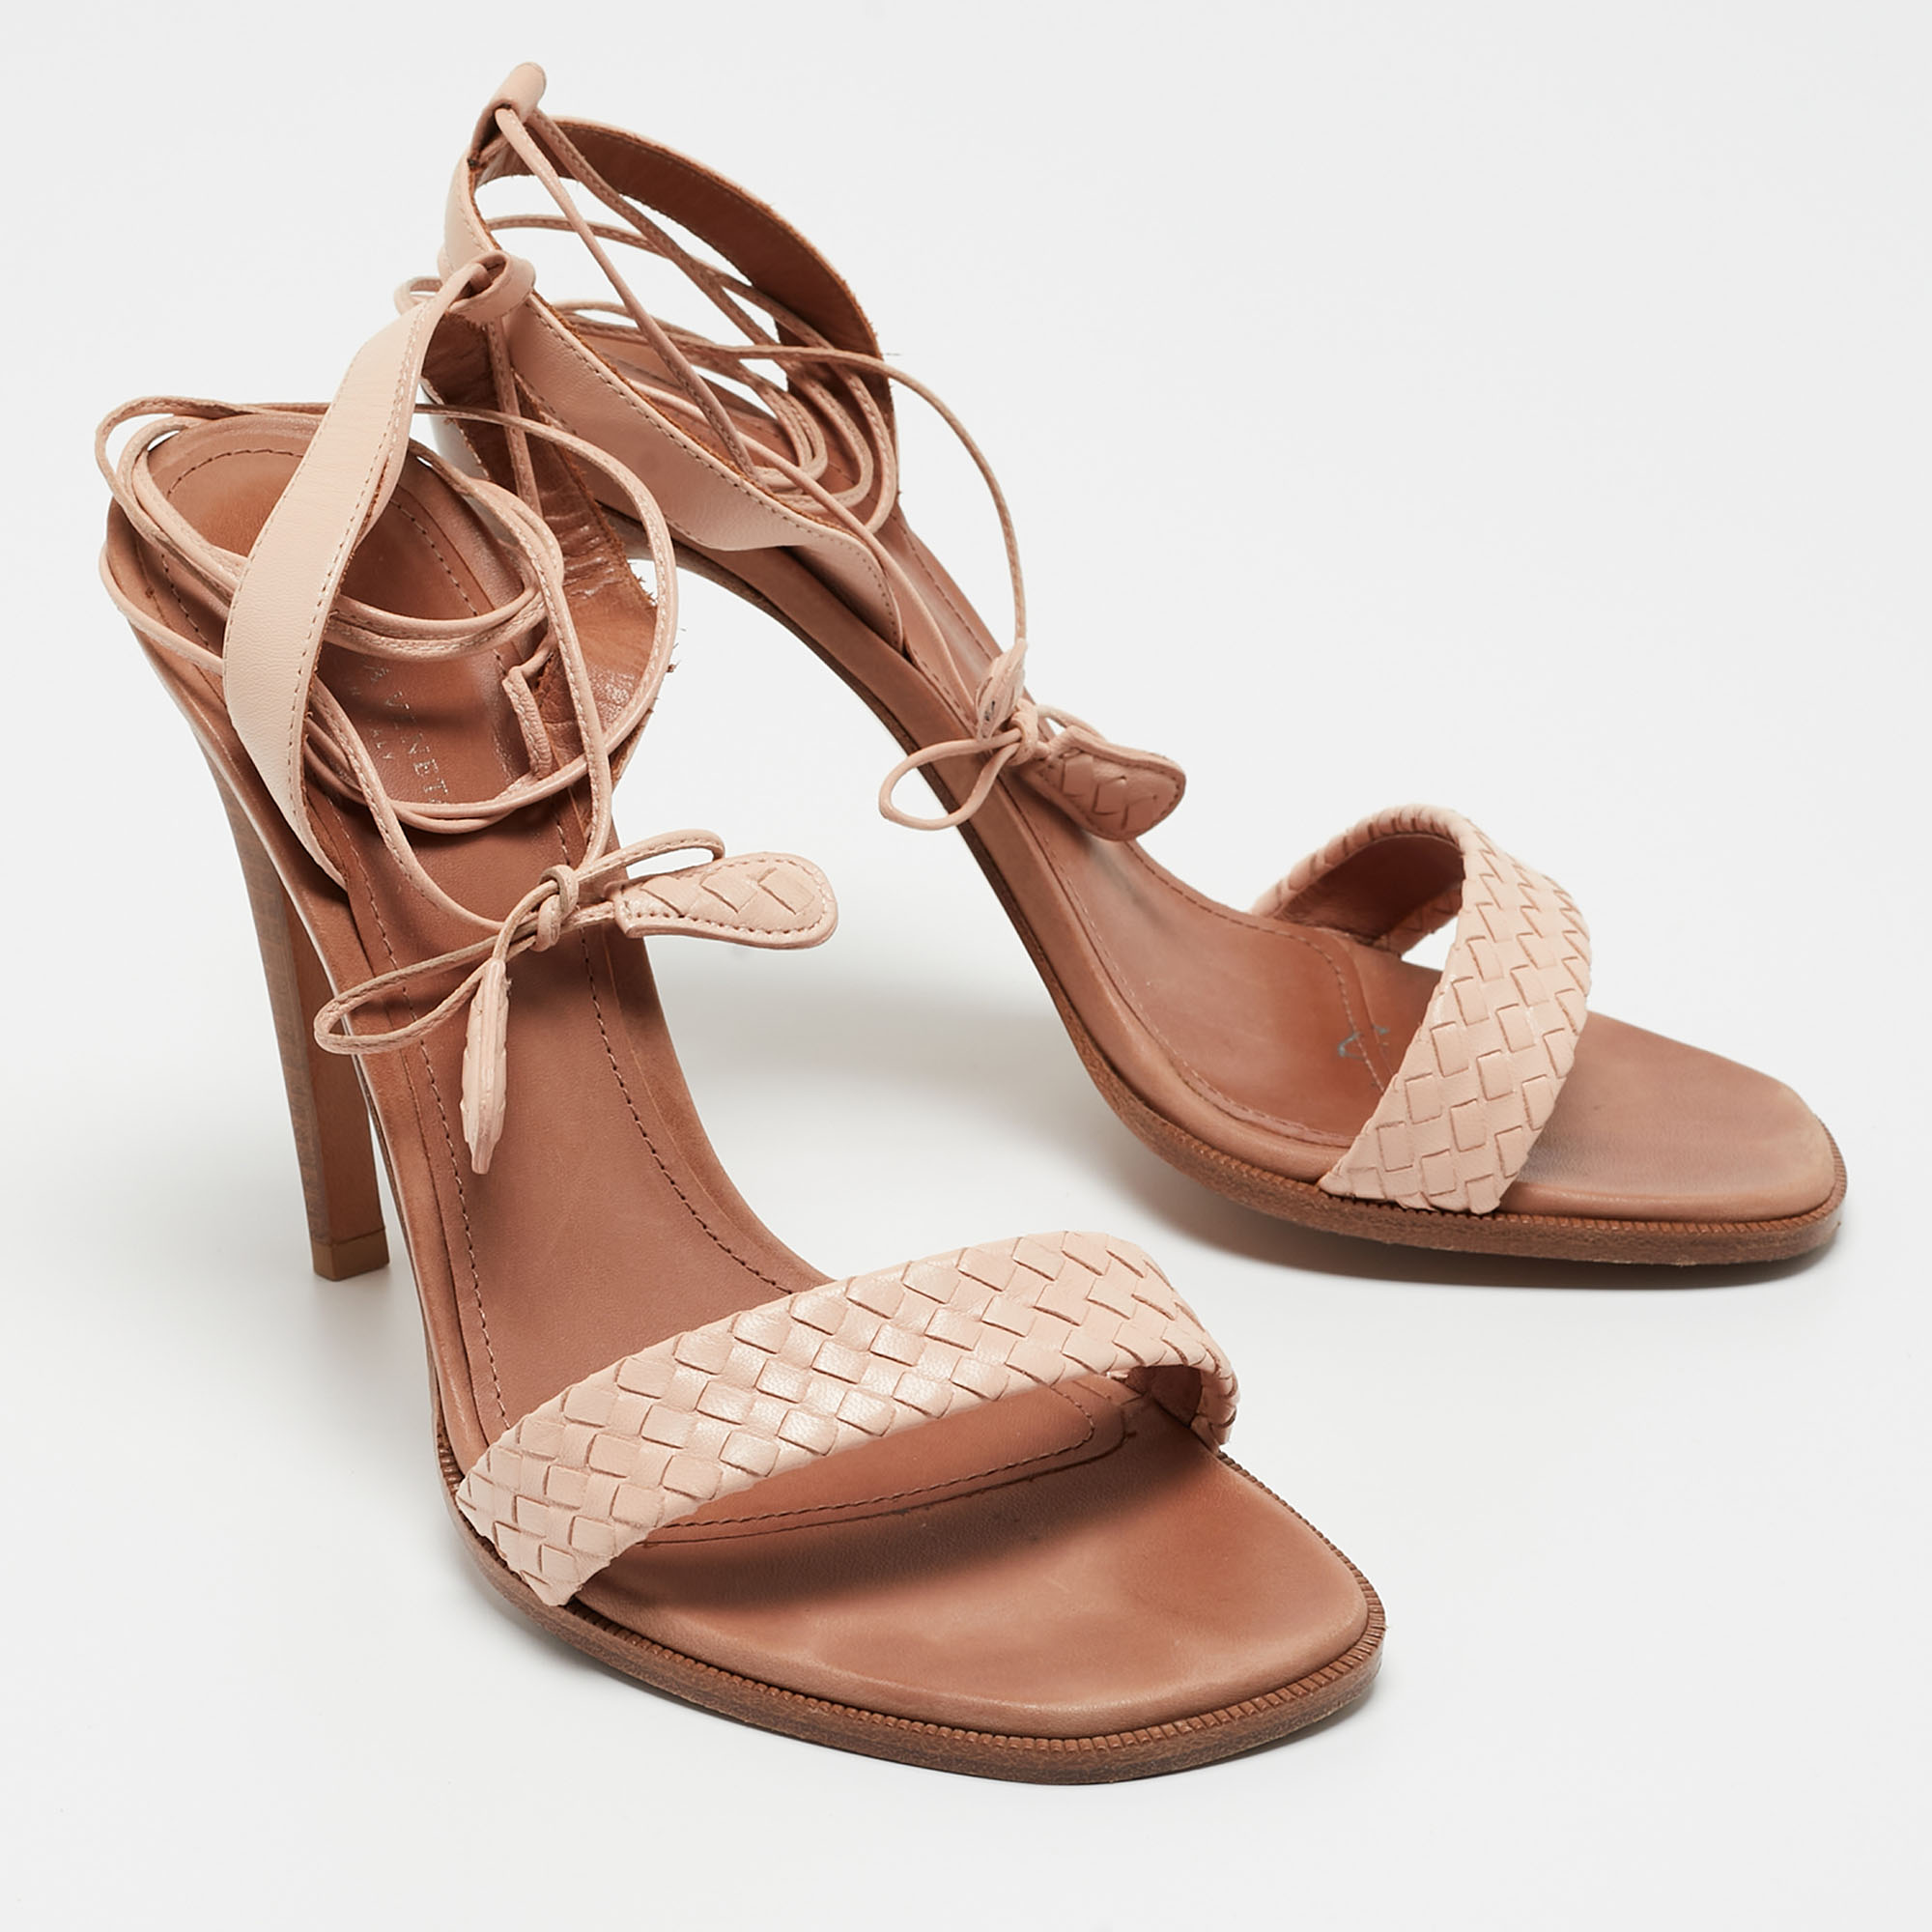 Bottega Veneta Light Pink Leather Ankle Tie Sandals Size 38.5